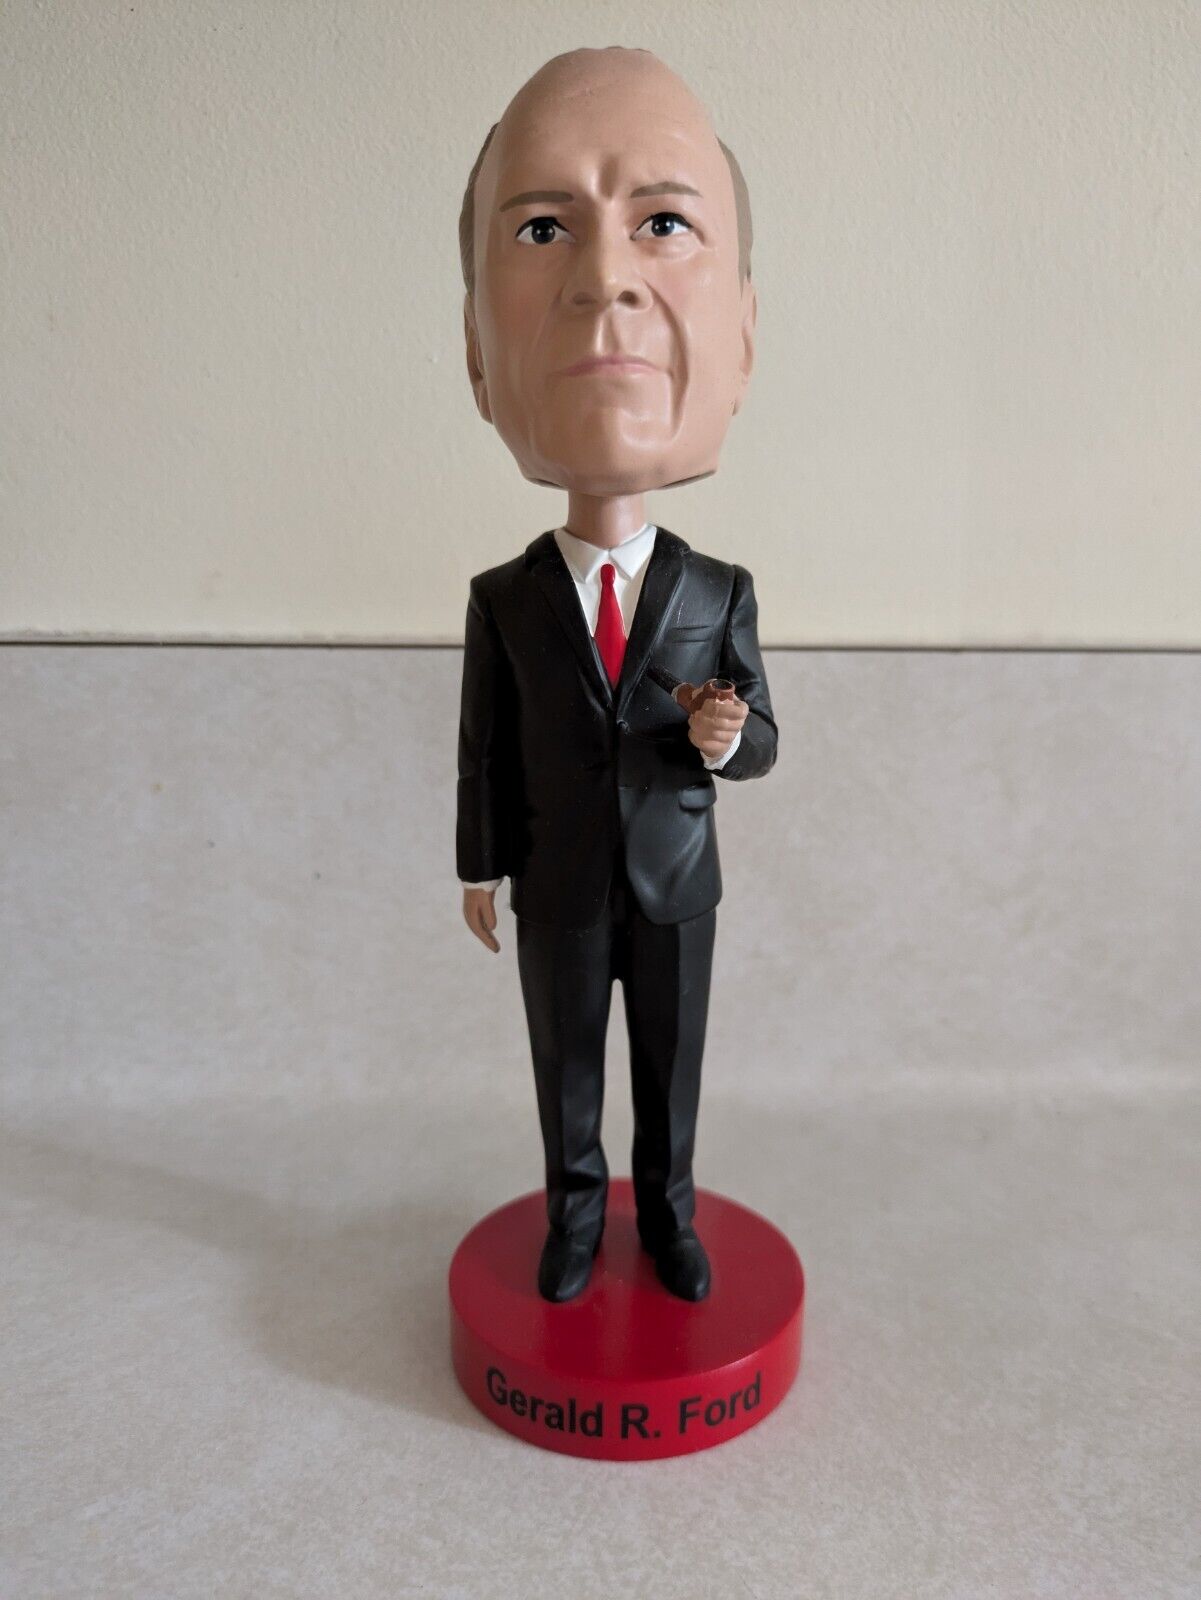 President Gerald R. Ford Royal Bobble Head